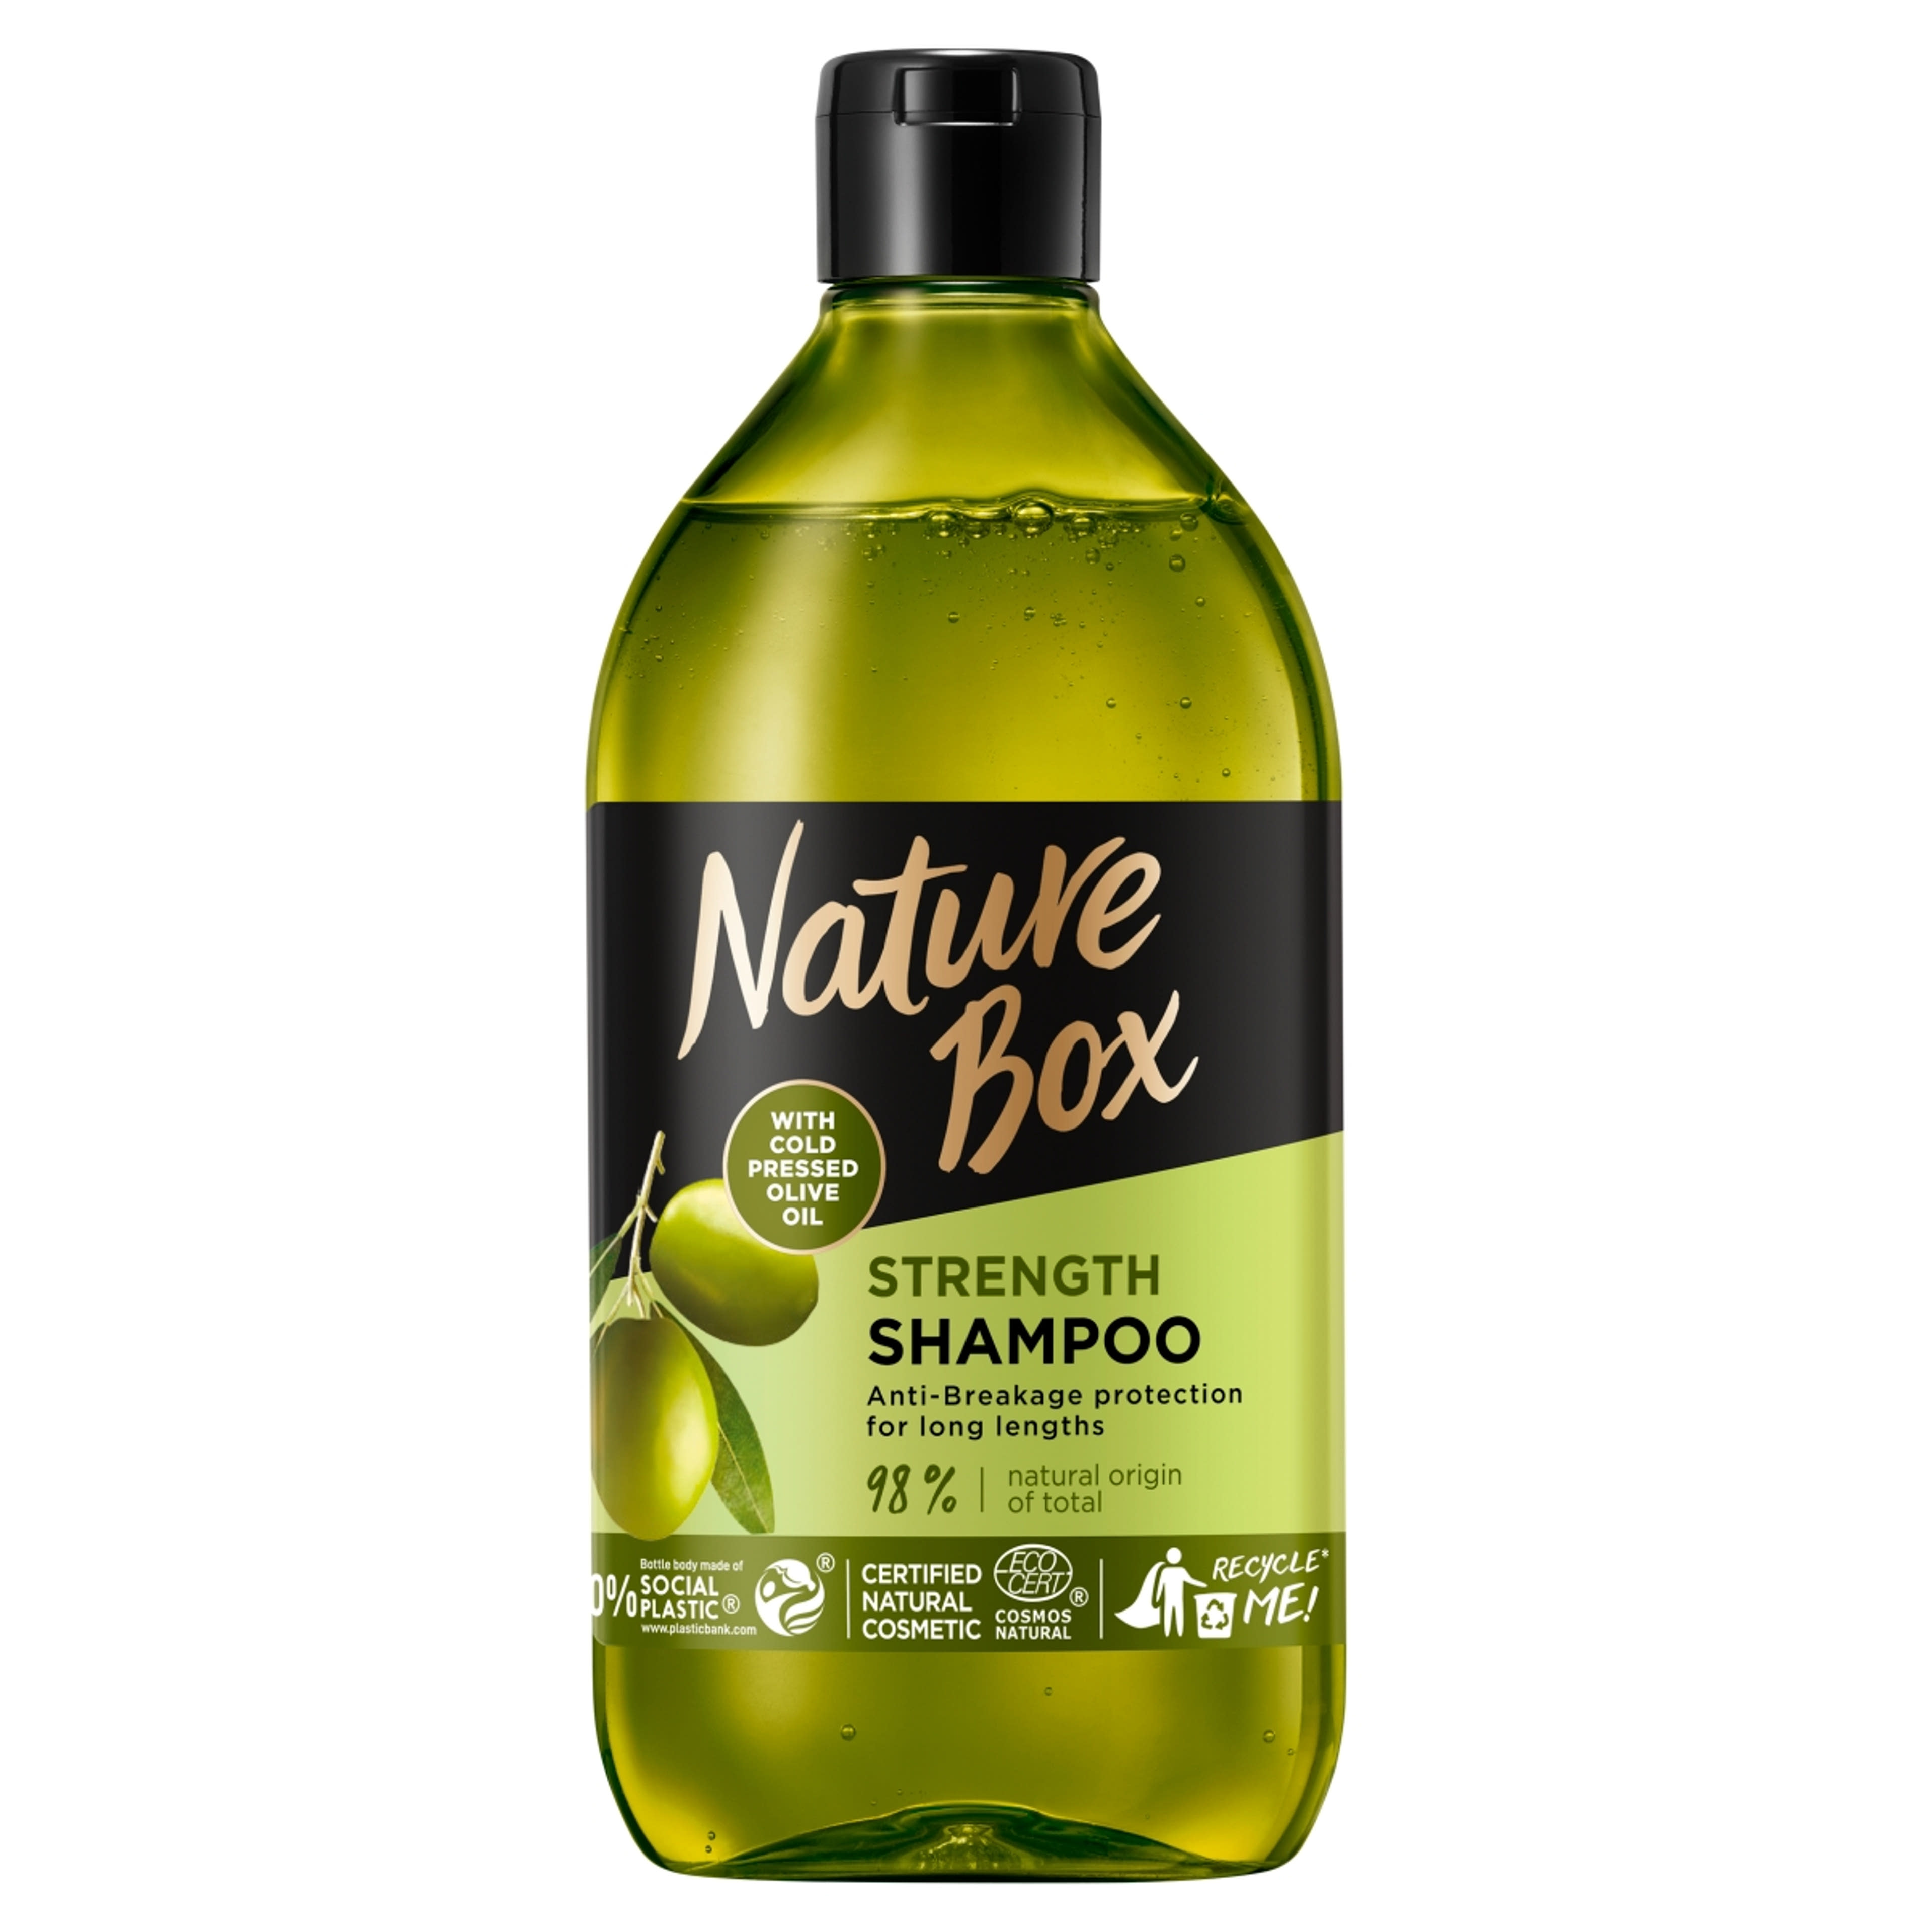 Nature box sampon oliva - 385 ml